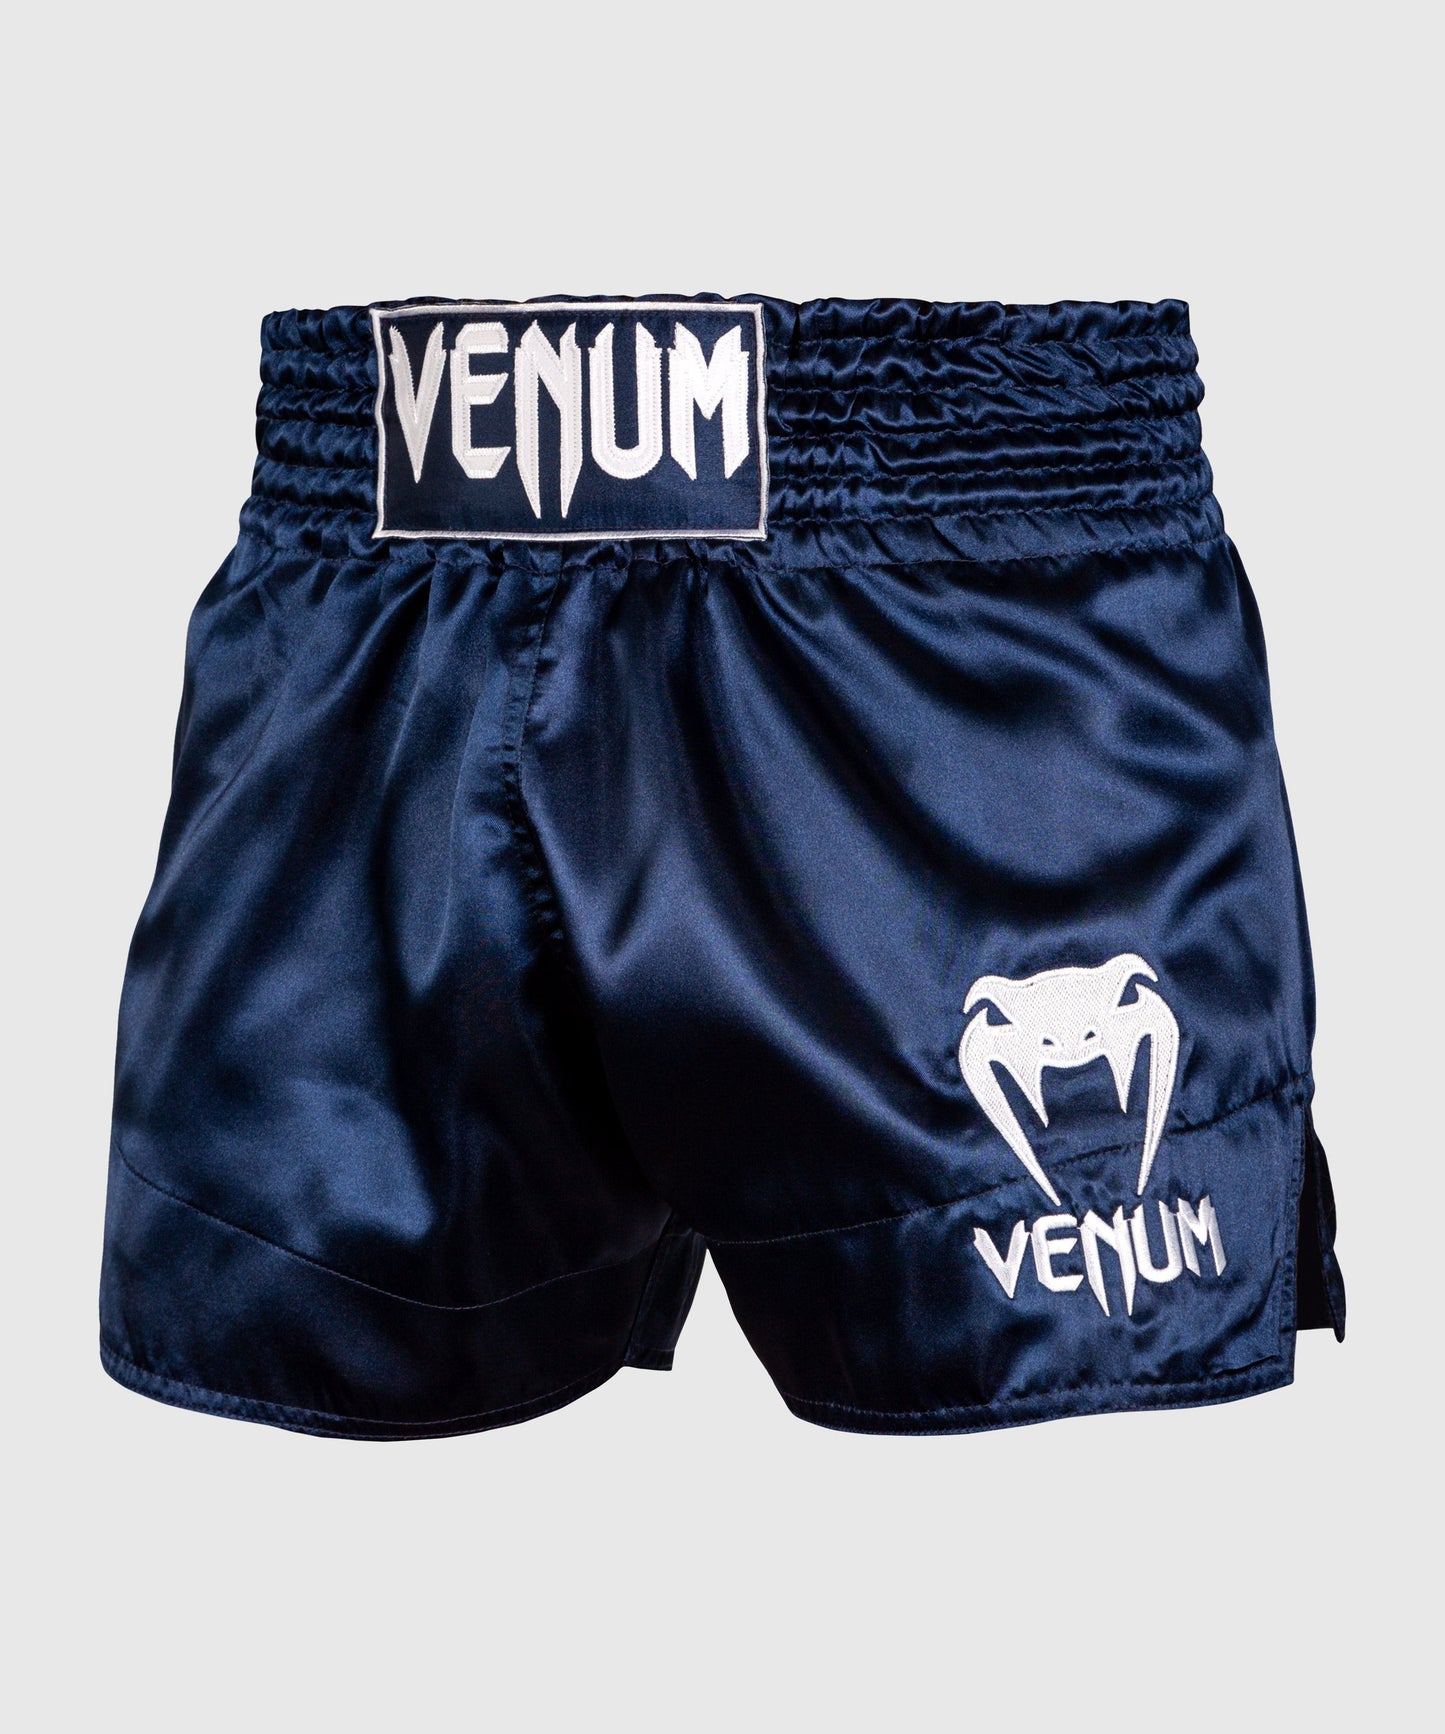 Venum Muay Thai Shorts Classic - Navy Blue/White